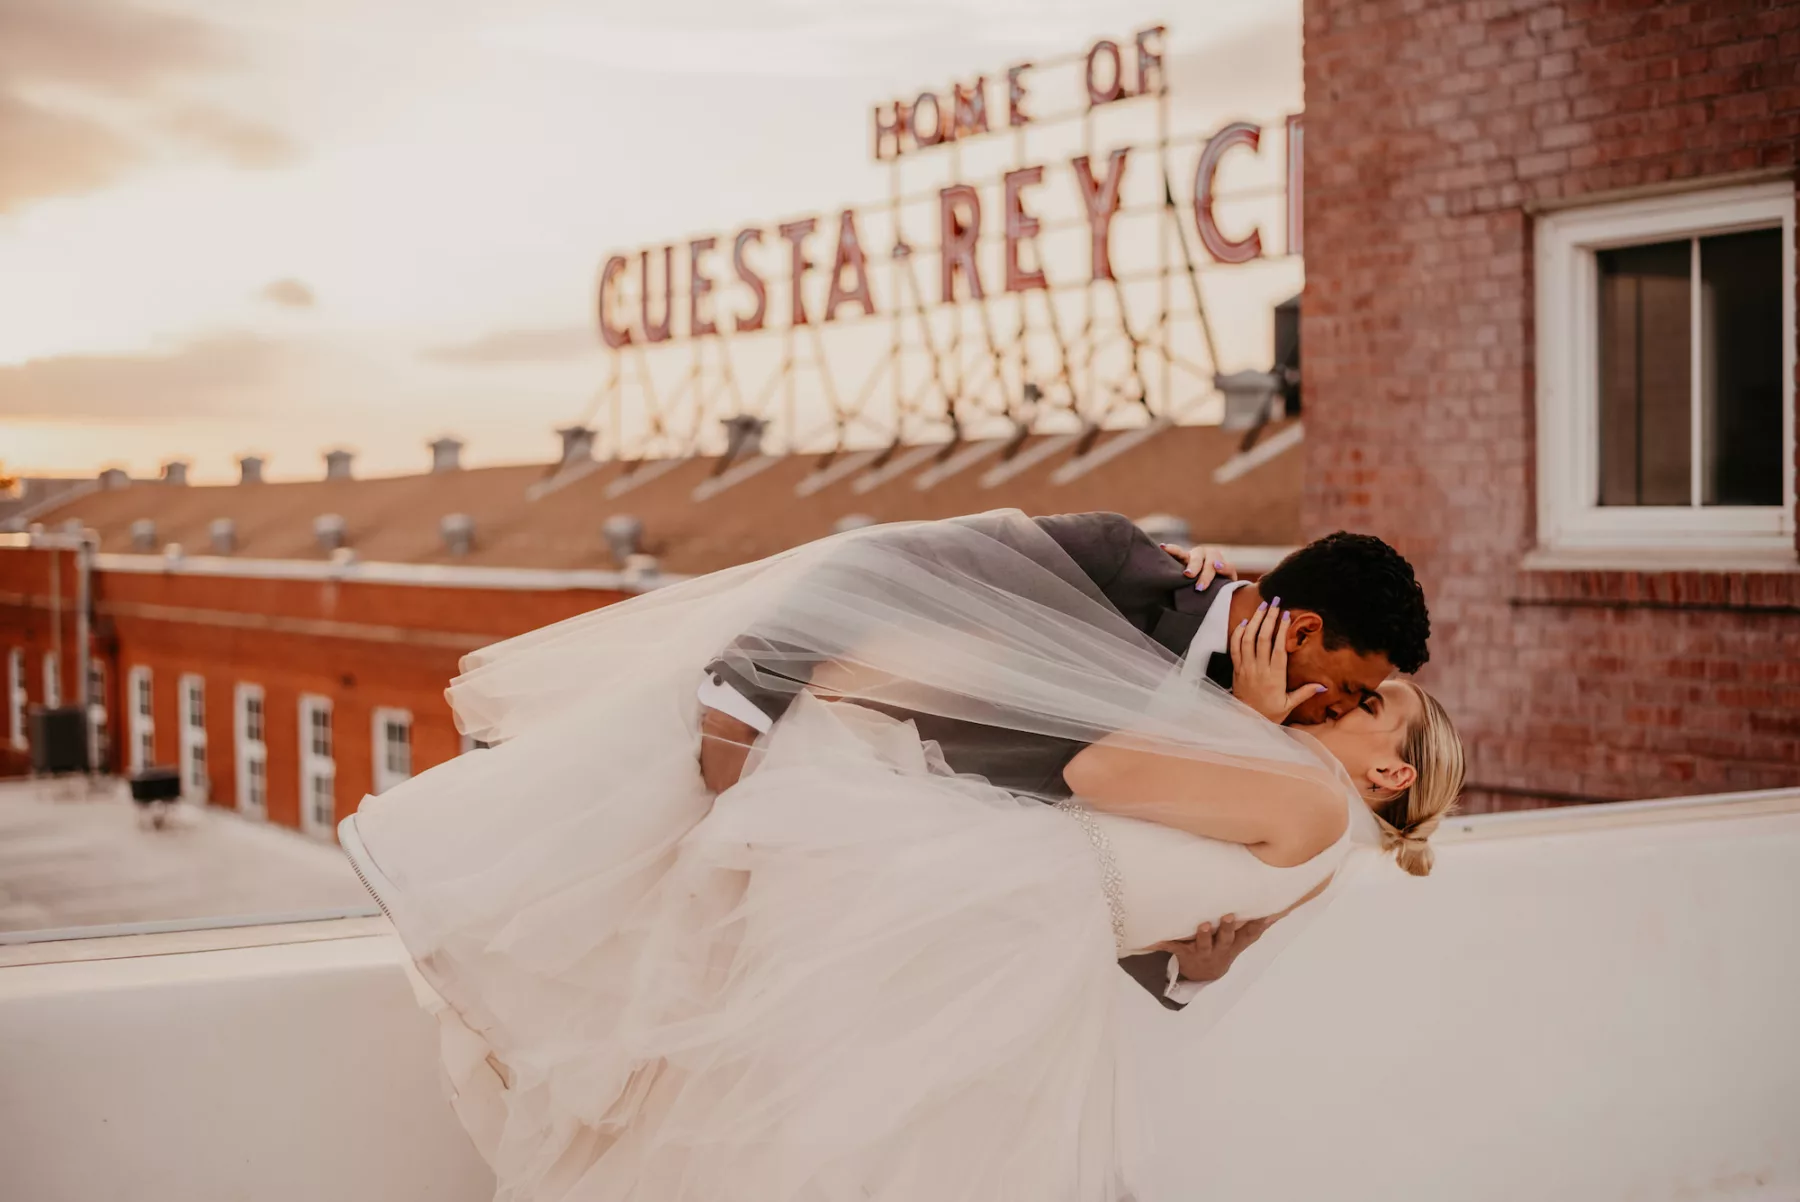 Intimate Bride and Groom Ybor Rooftop Wedding Portrait | Tampa Bay Planner B Eventful | Historic Ybor Cigar Factory Industrial Wedding Venue Inspiration J.C. Newman